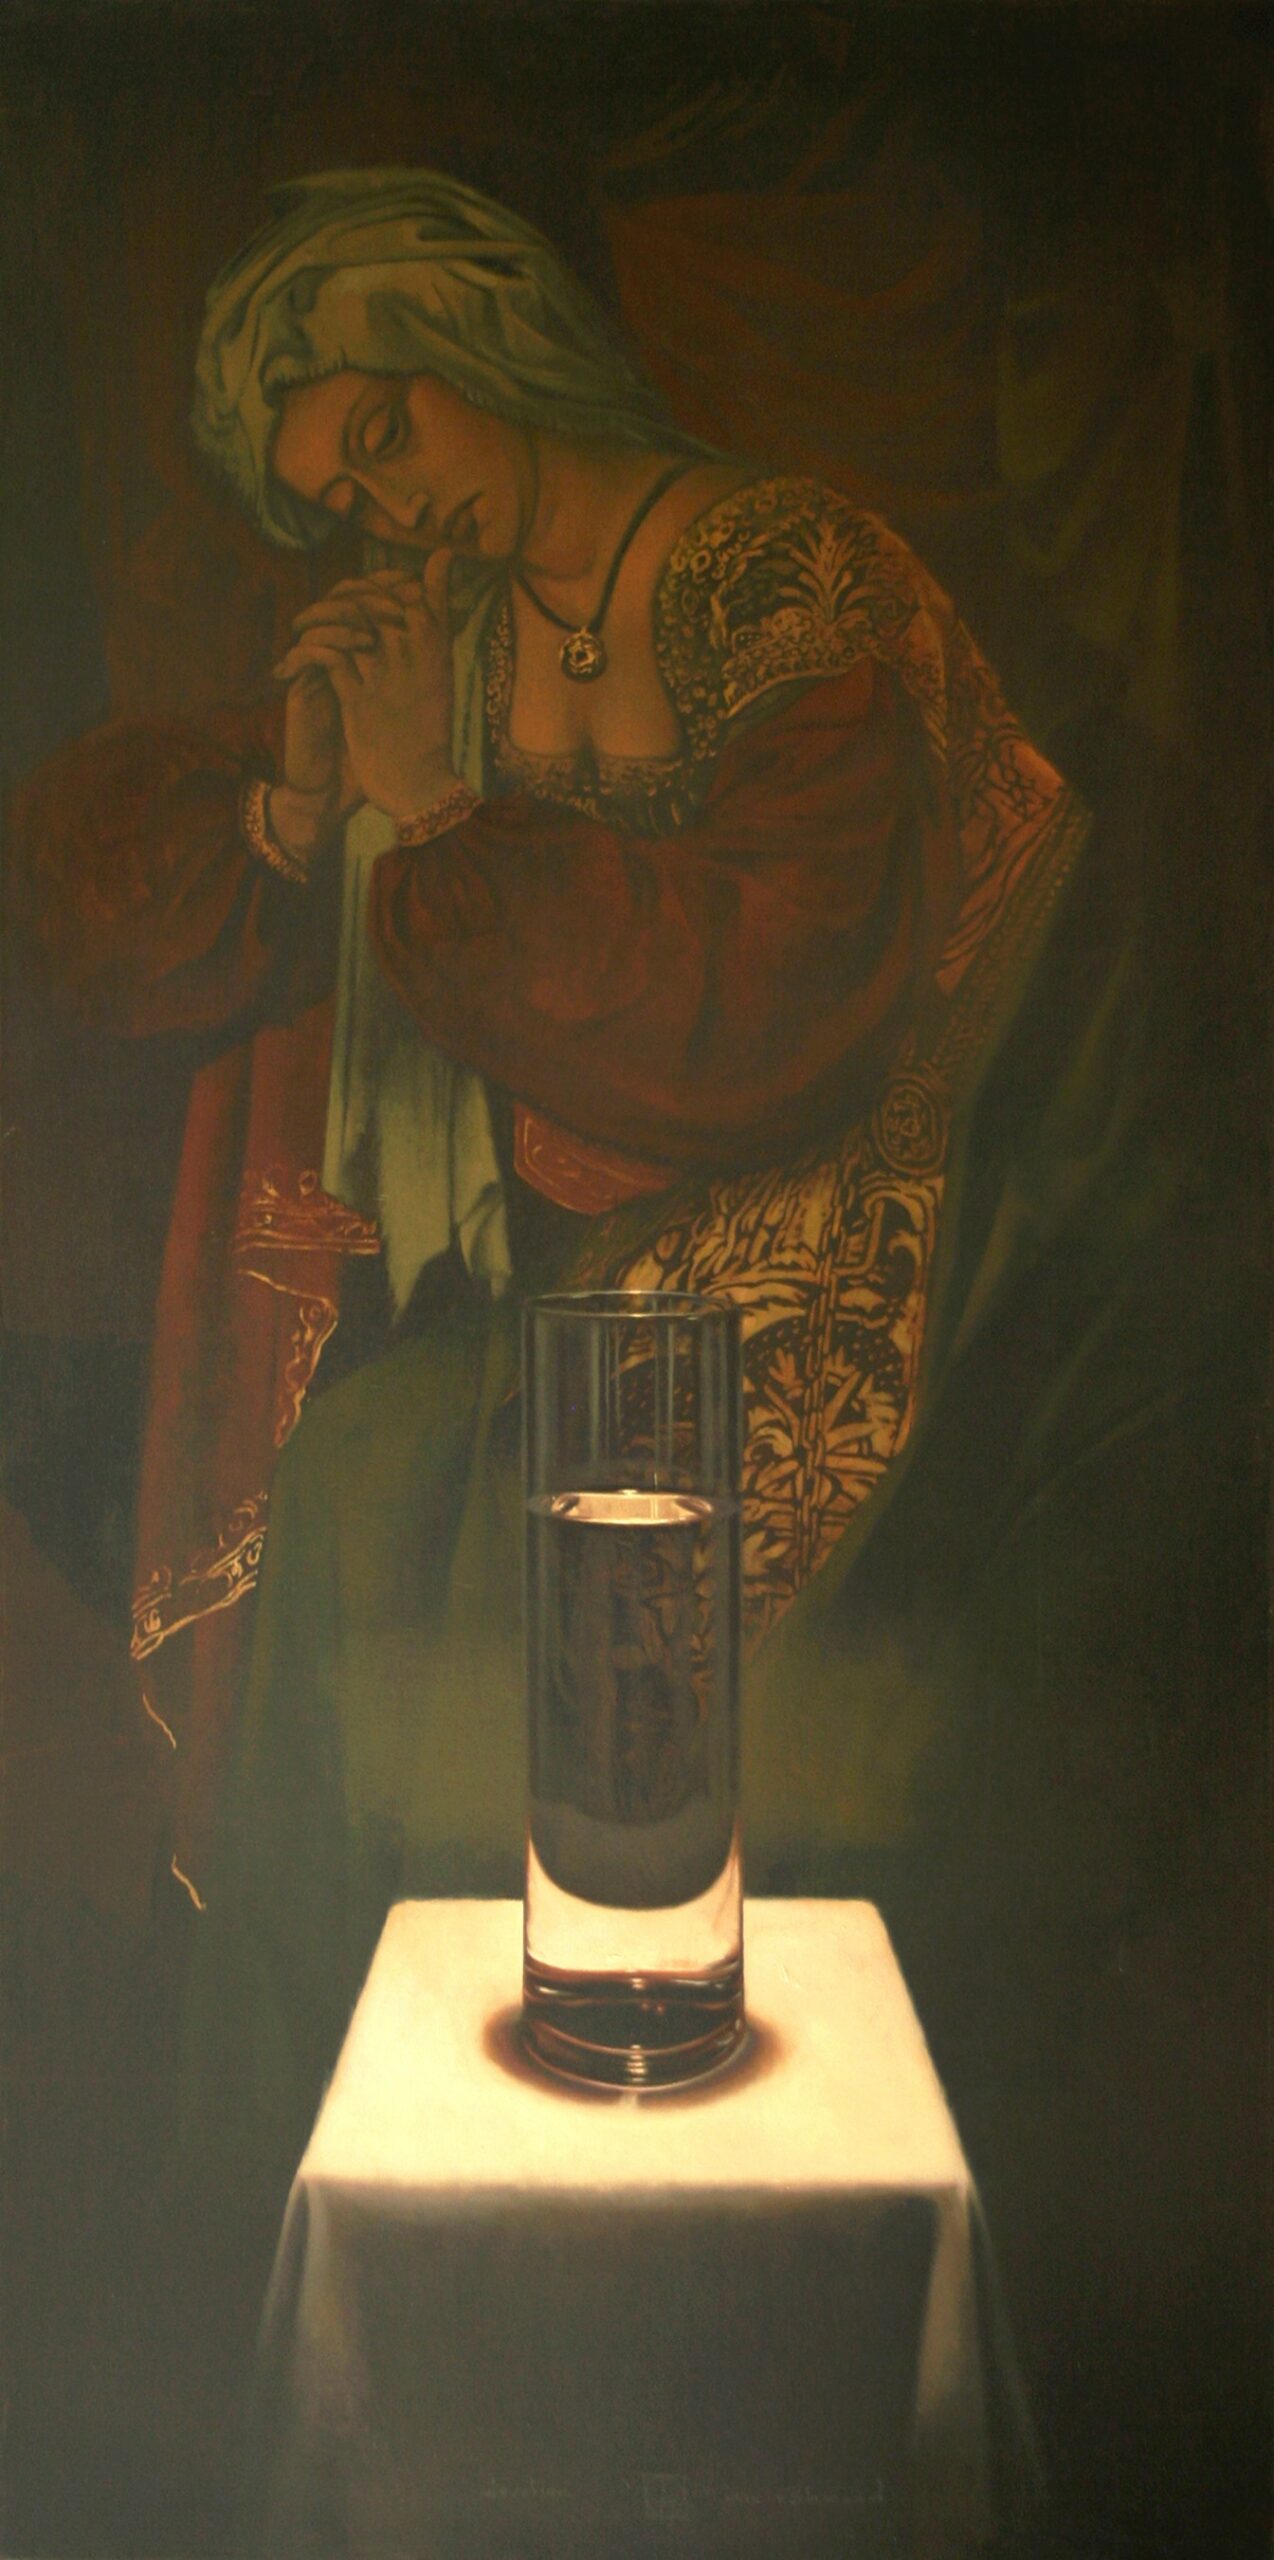 Richmond, Ron, devotion, oil and leaf on canvas, 56 x 28, $6,500